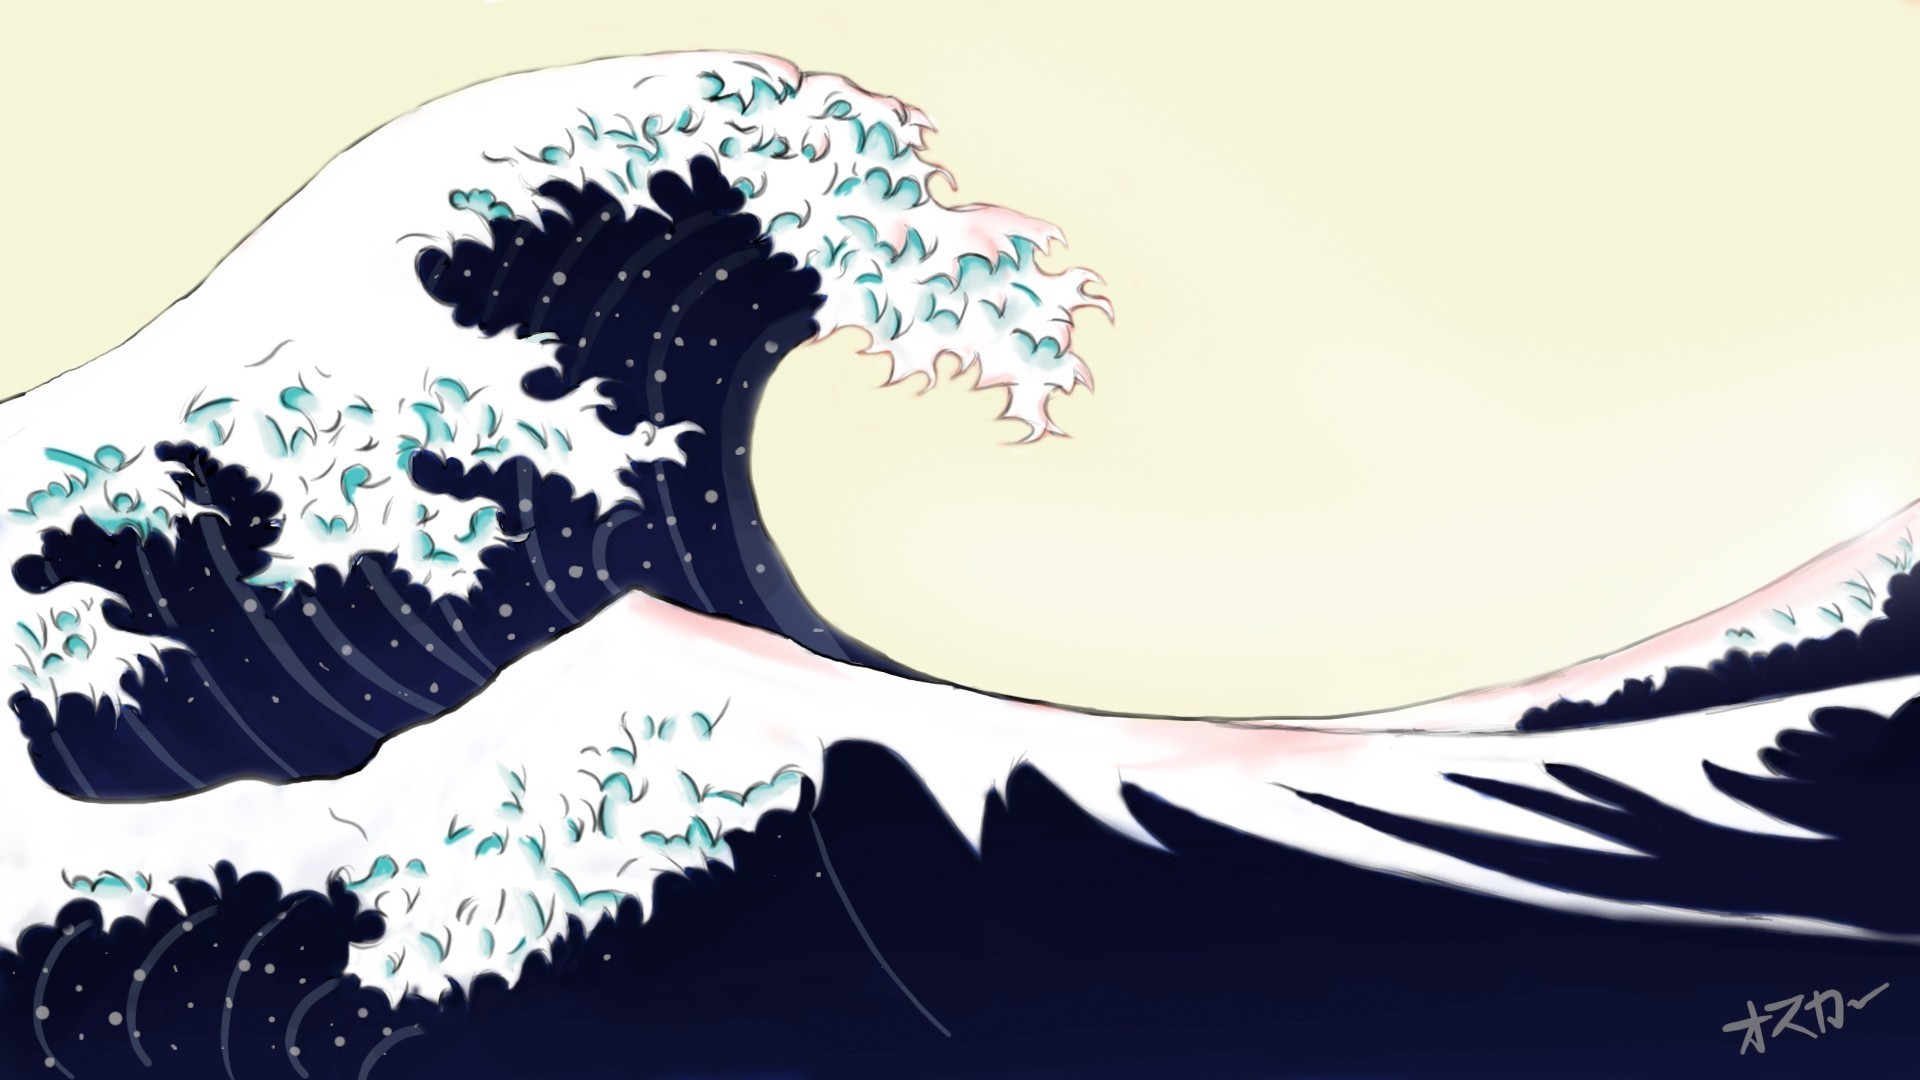 1920x1080 Great wave off kanagawa artwork blue ocean wallpaper